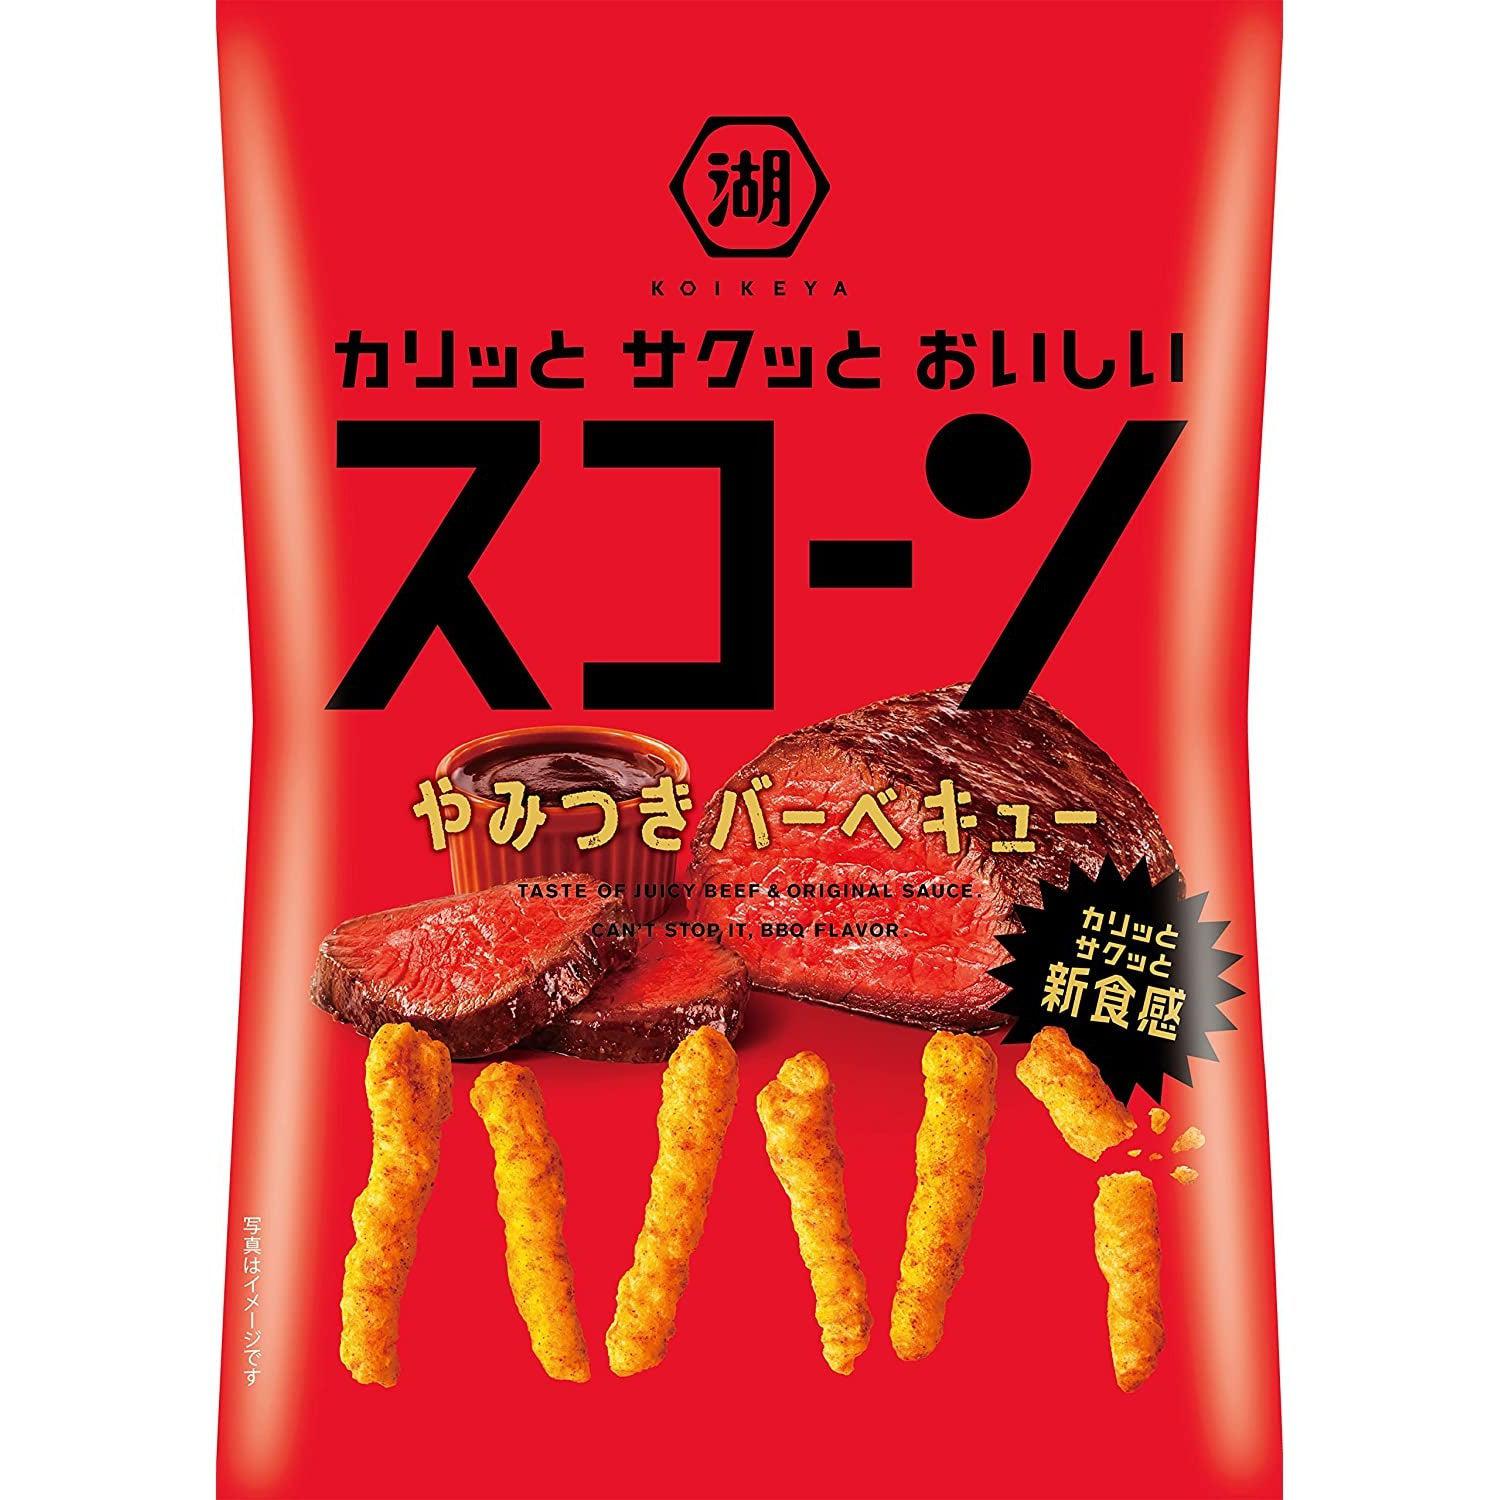 Koikeya Scorn BBQ Barbecue Corn Puffs Snack 78g (Pack of 3 Bags)